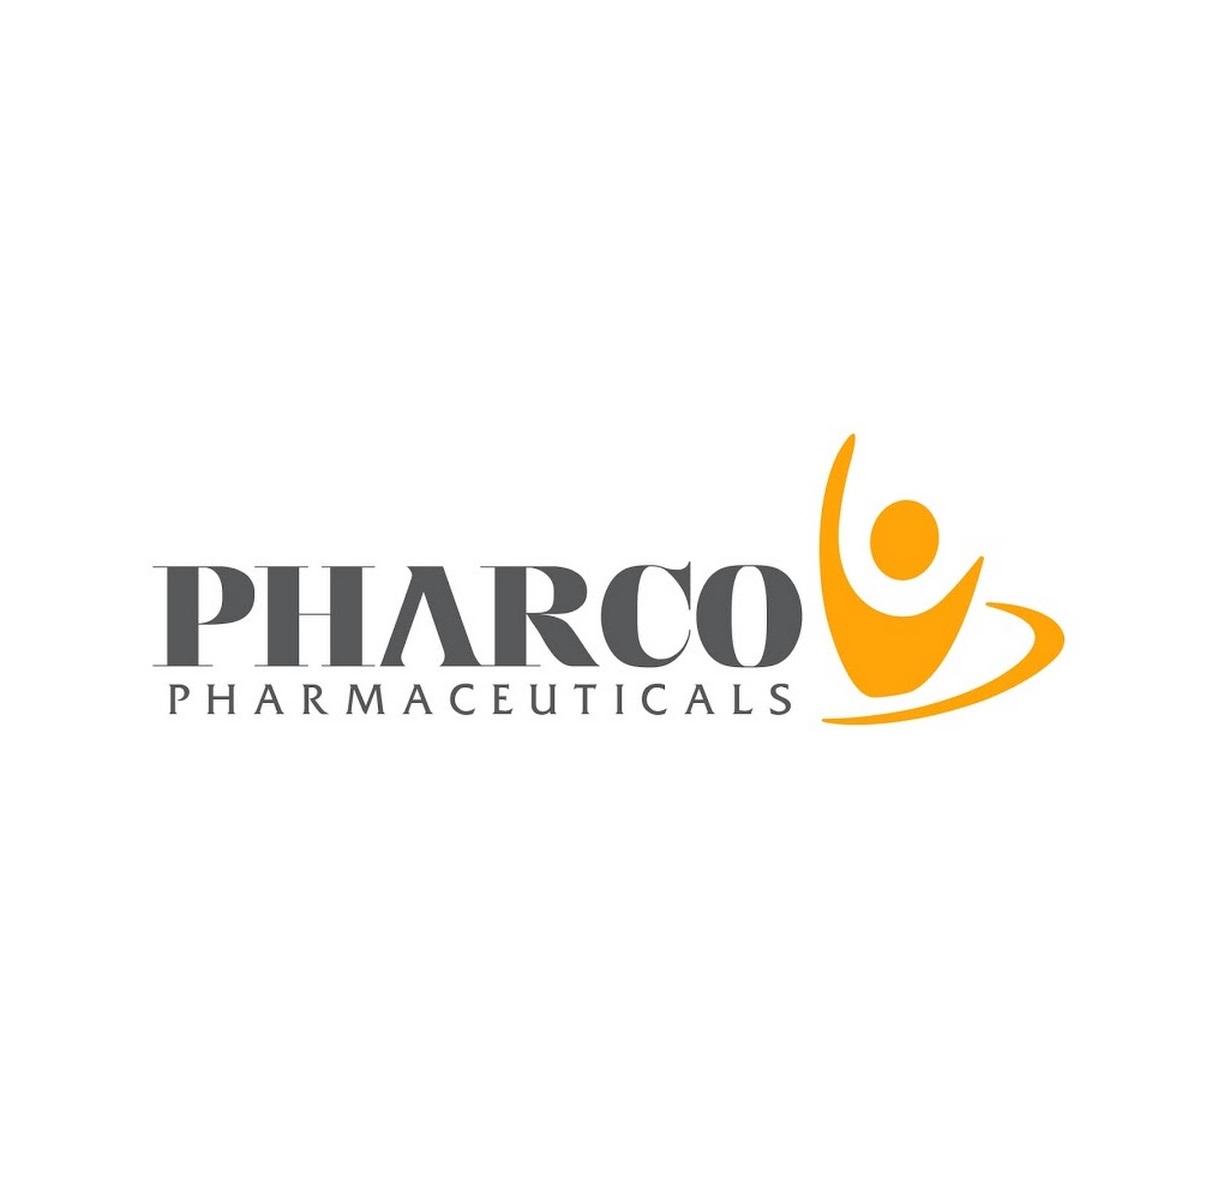 Pharco Corporation